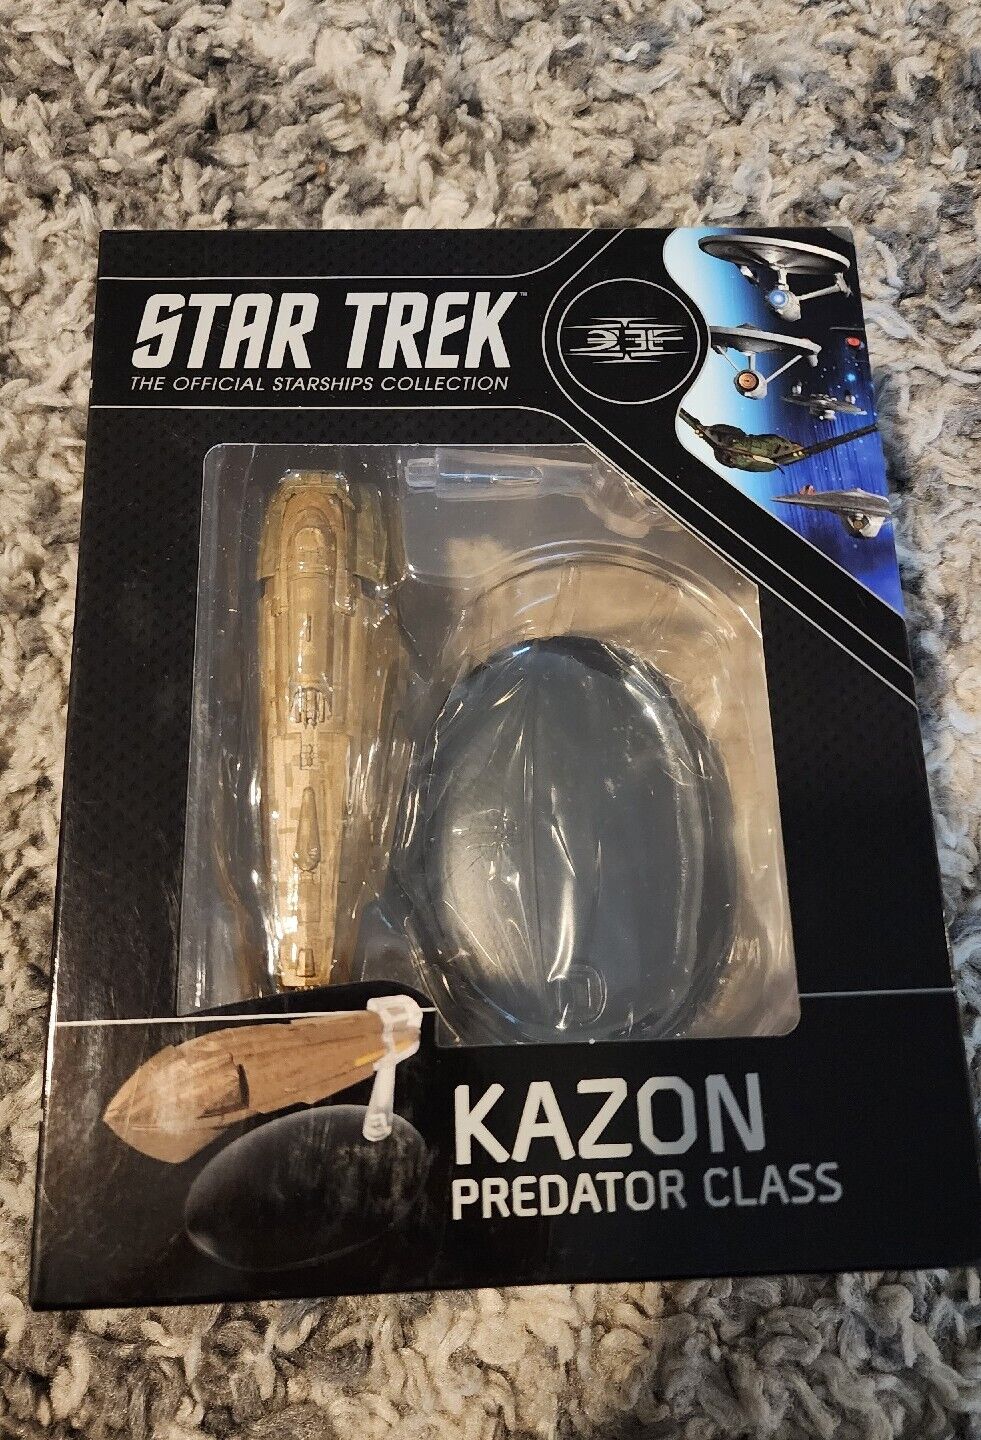 Kazon Predator Class Star Trek Eaglemoss Bonus Edition new in box